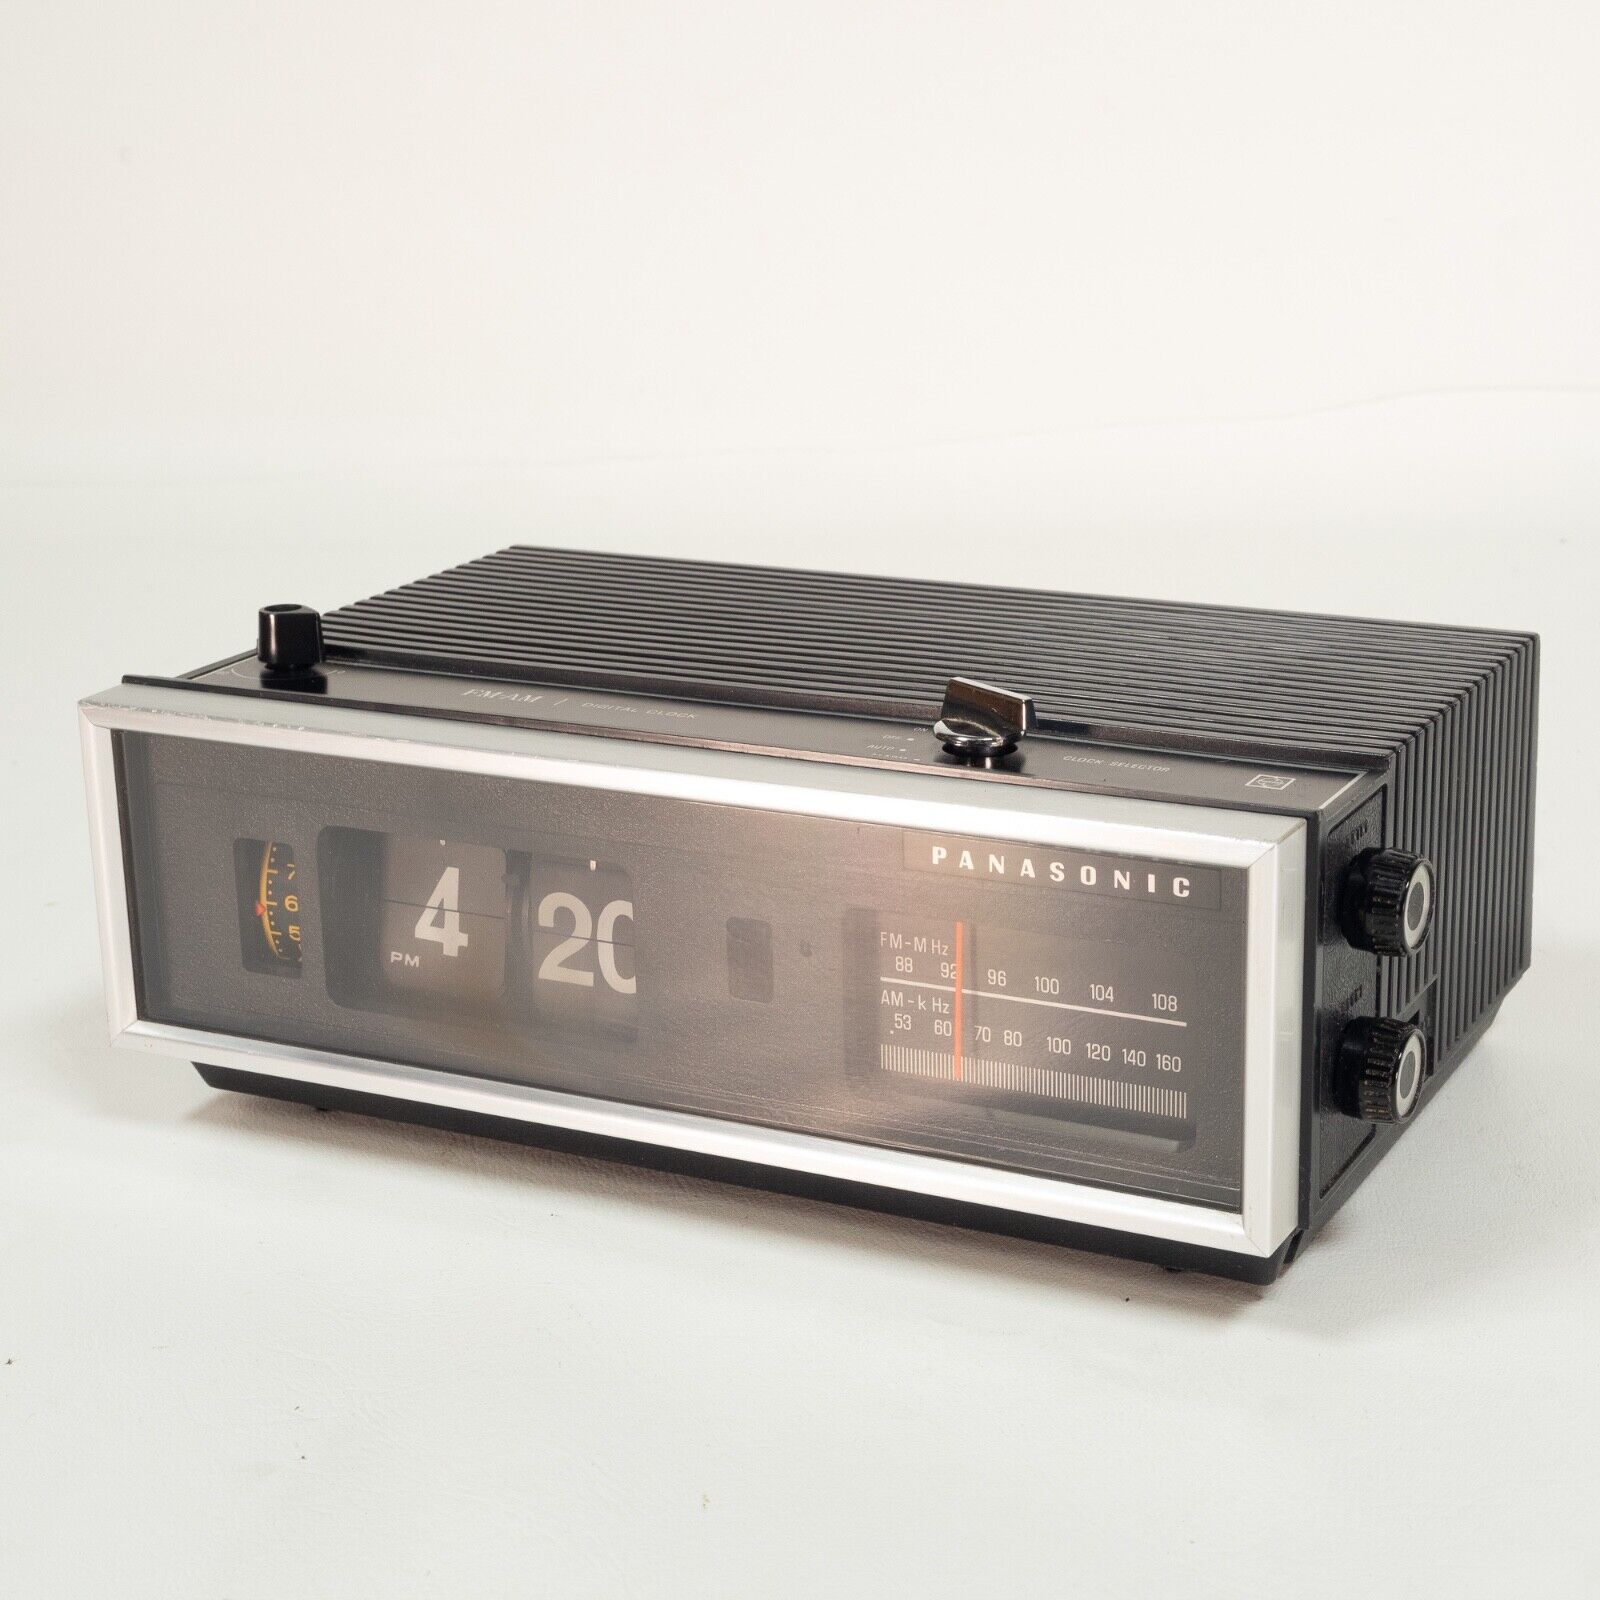 Vintage 1970 Panasonic RC-7021 Lighted AM/FM Alarm “Maywood” GREAT CONDITION